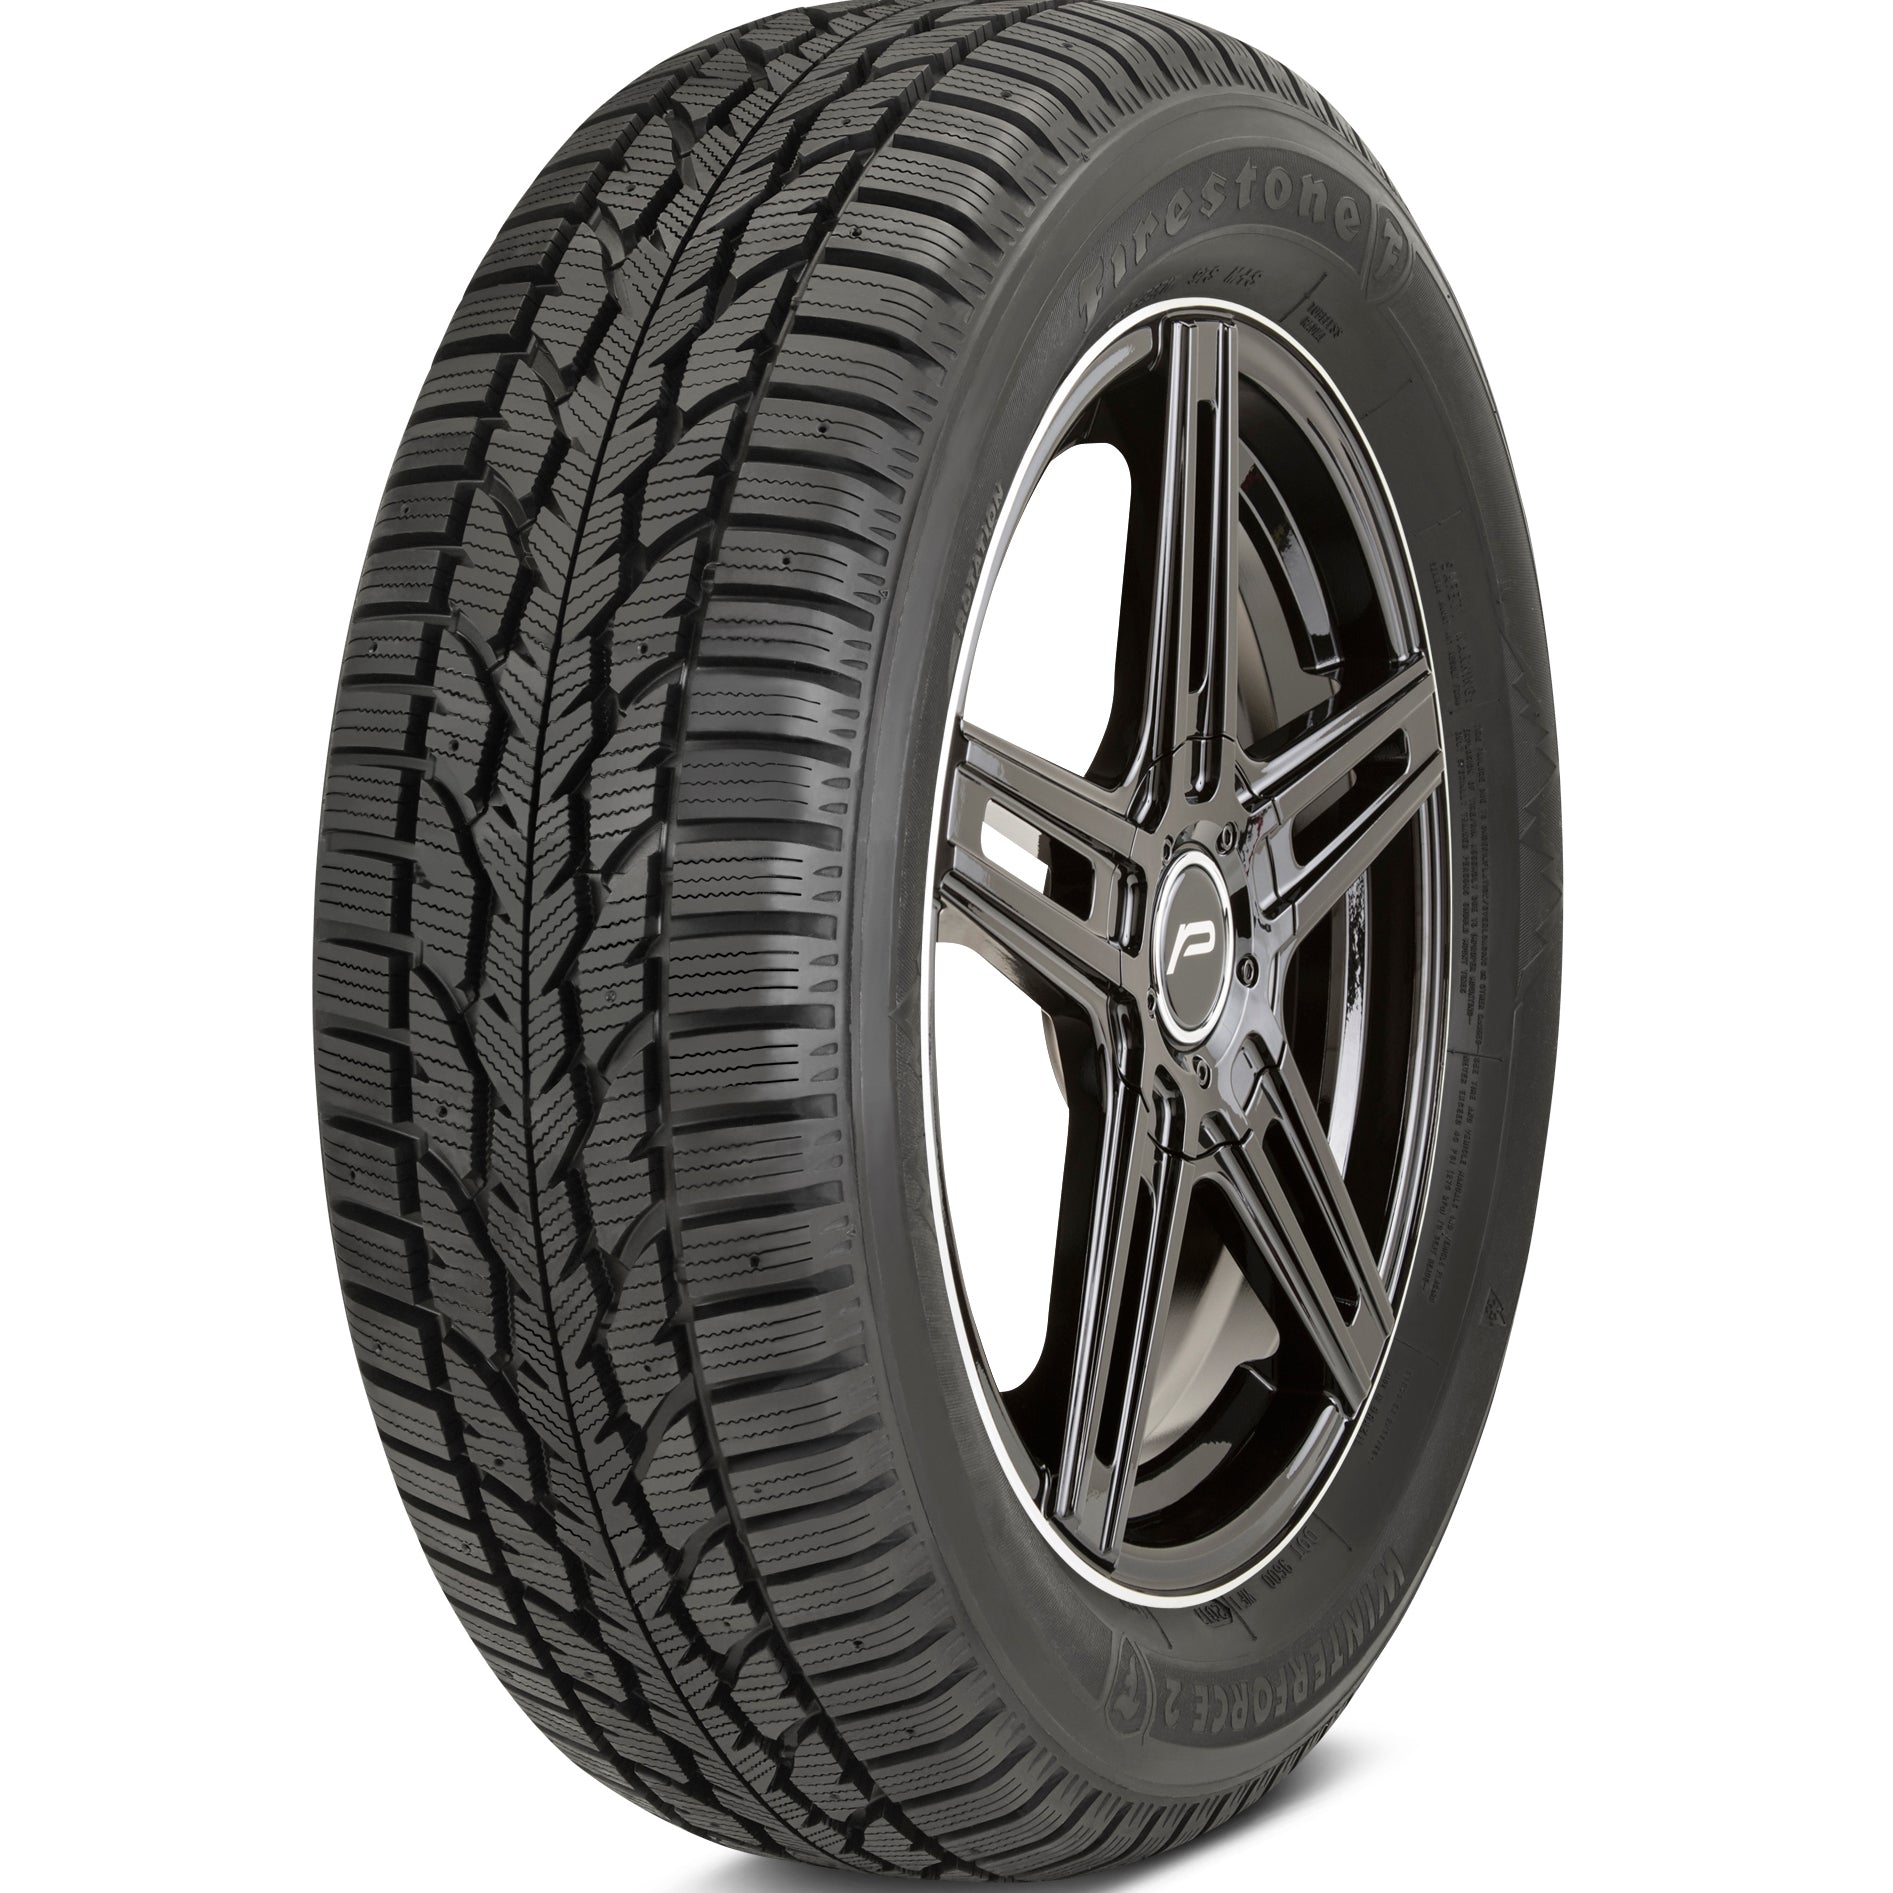 FIRESTONE WINTERFORCE2 215/50R17 (25.5X8.5R 17) Tires